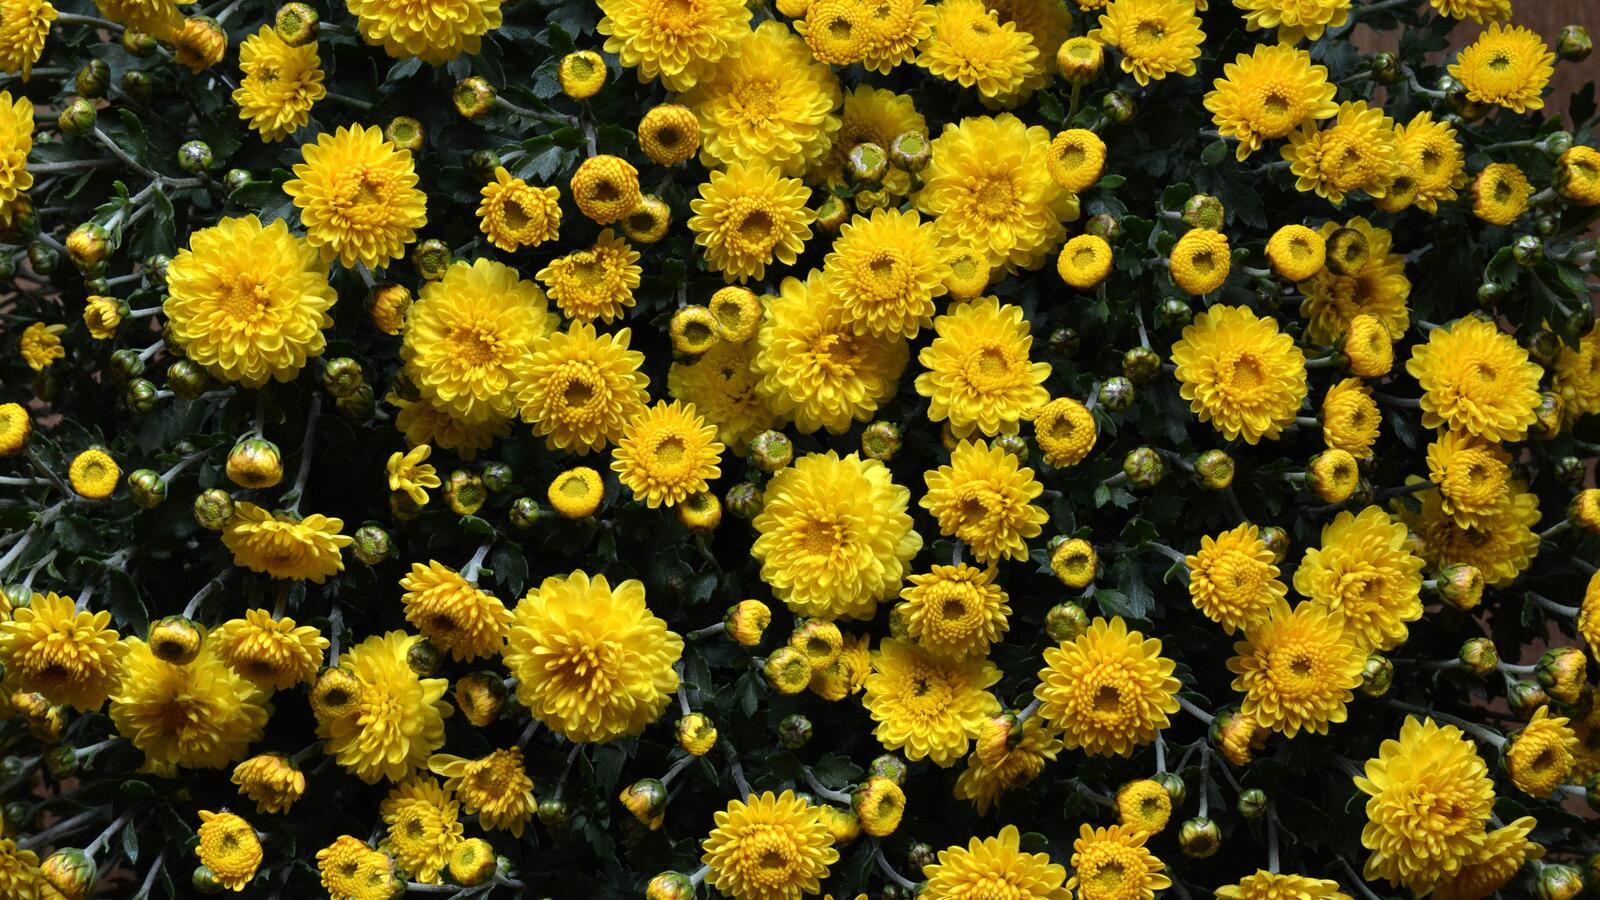 Wallpapers yellow flowers chrysanthemum garden on the desktop